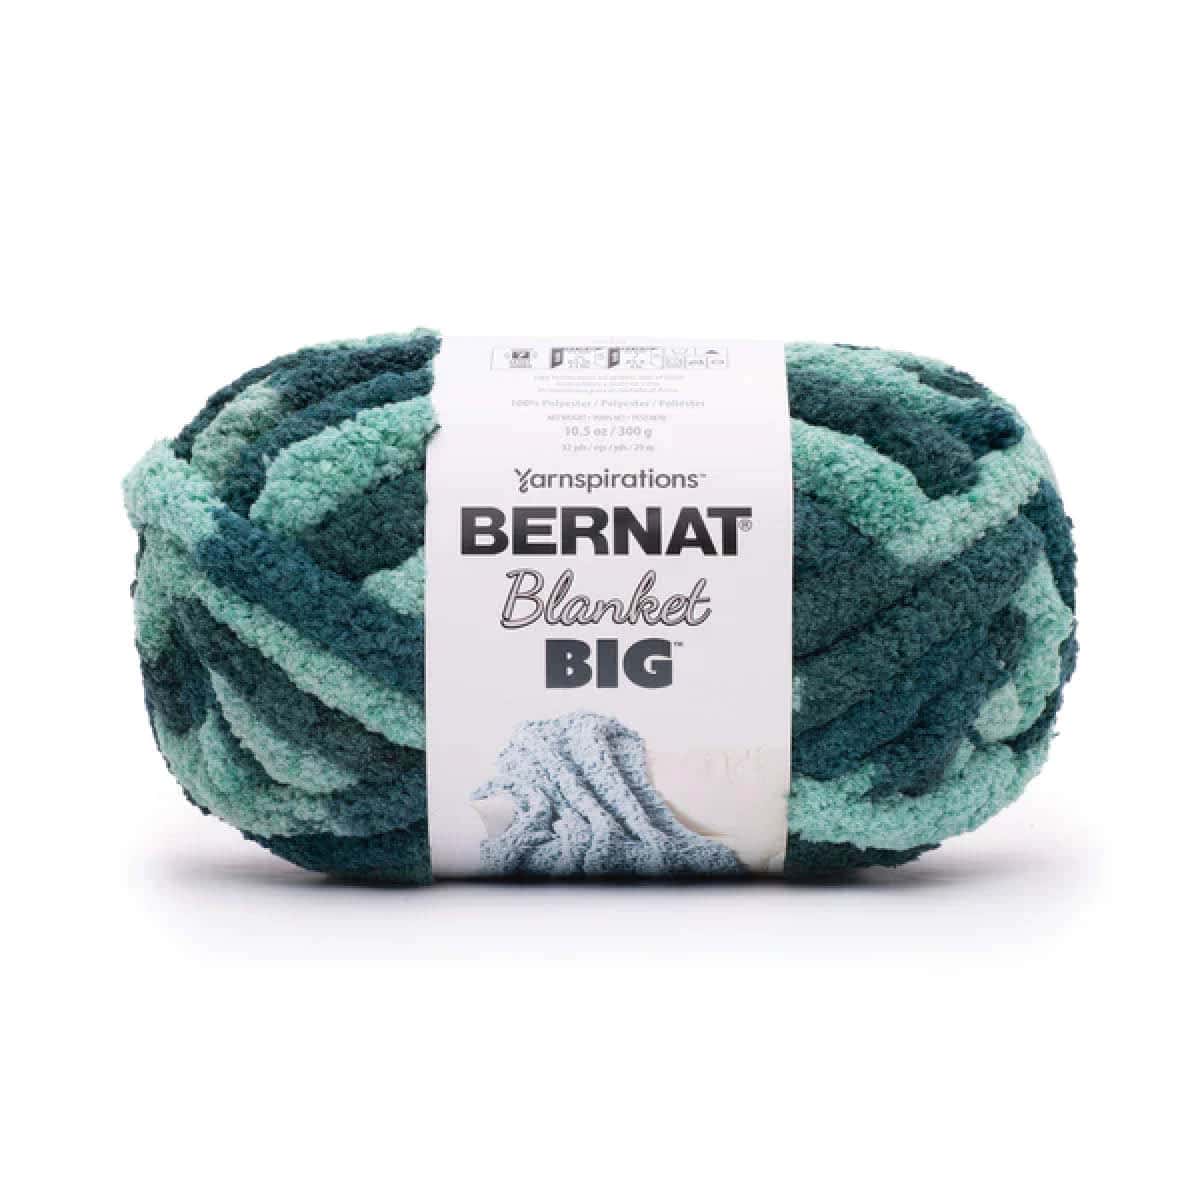 Bernat Blanket Big Yarn Product